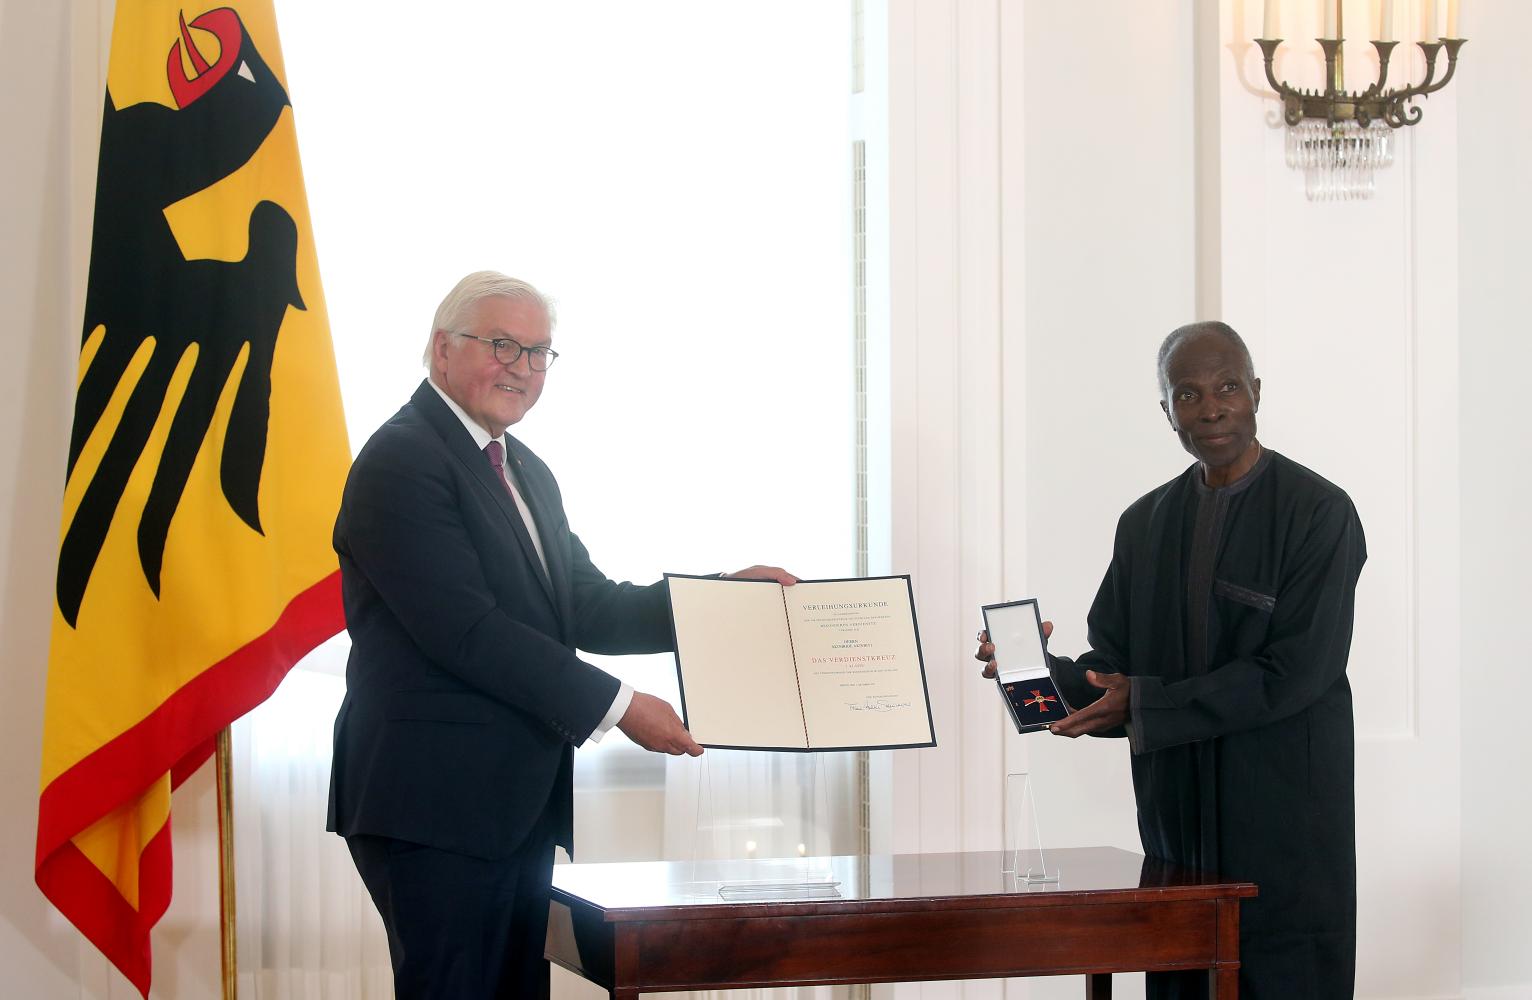 Akinbode Akinbiyi Awarded Order of Merit of Germany